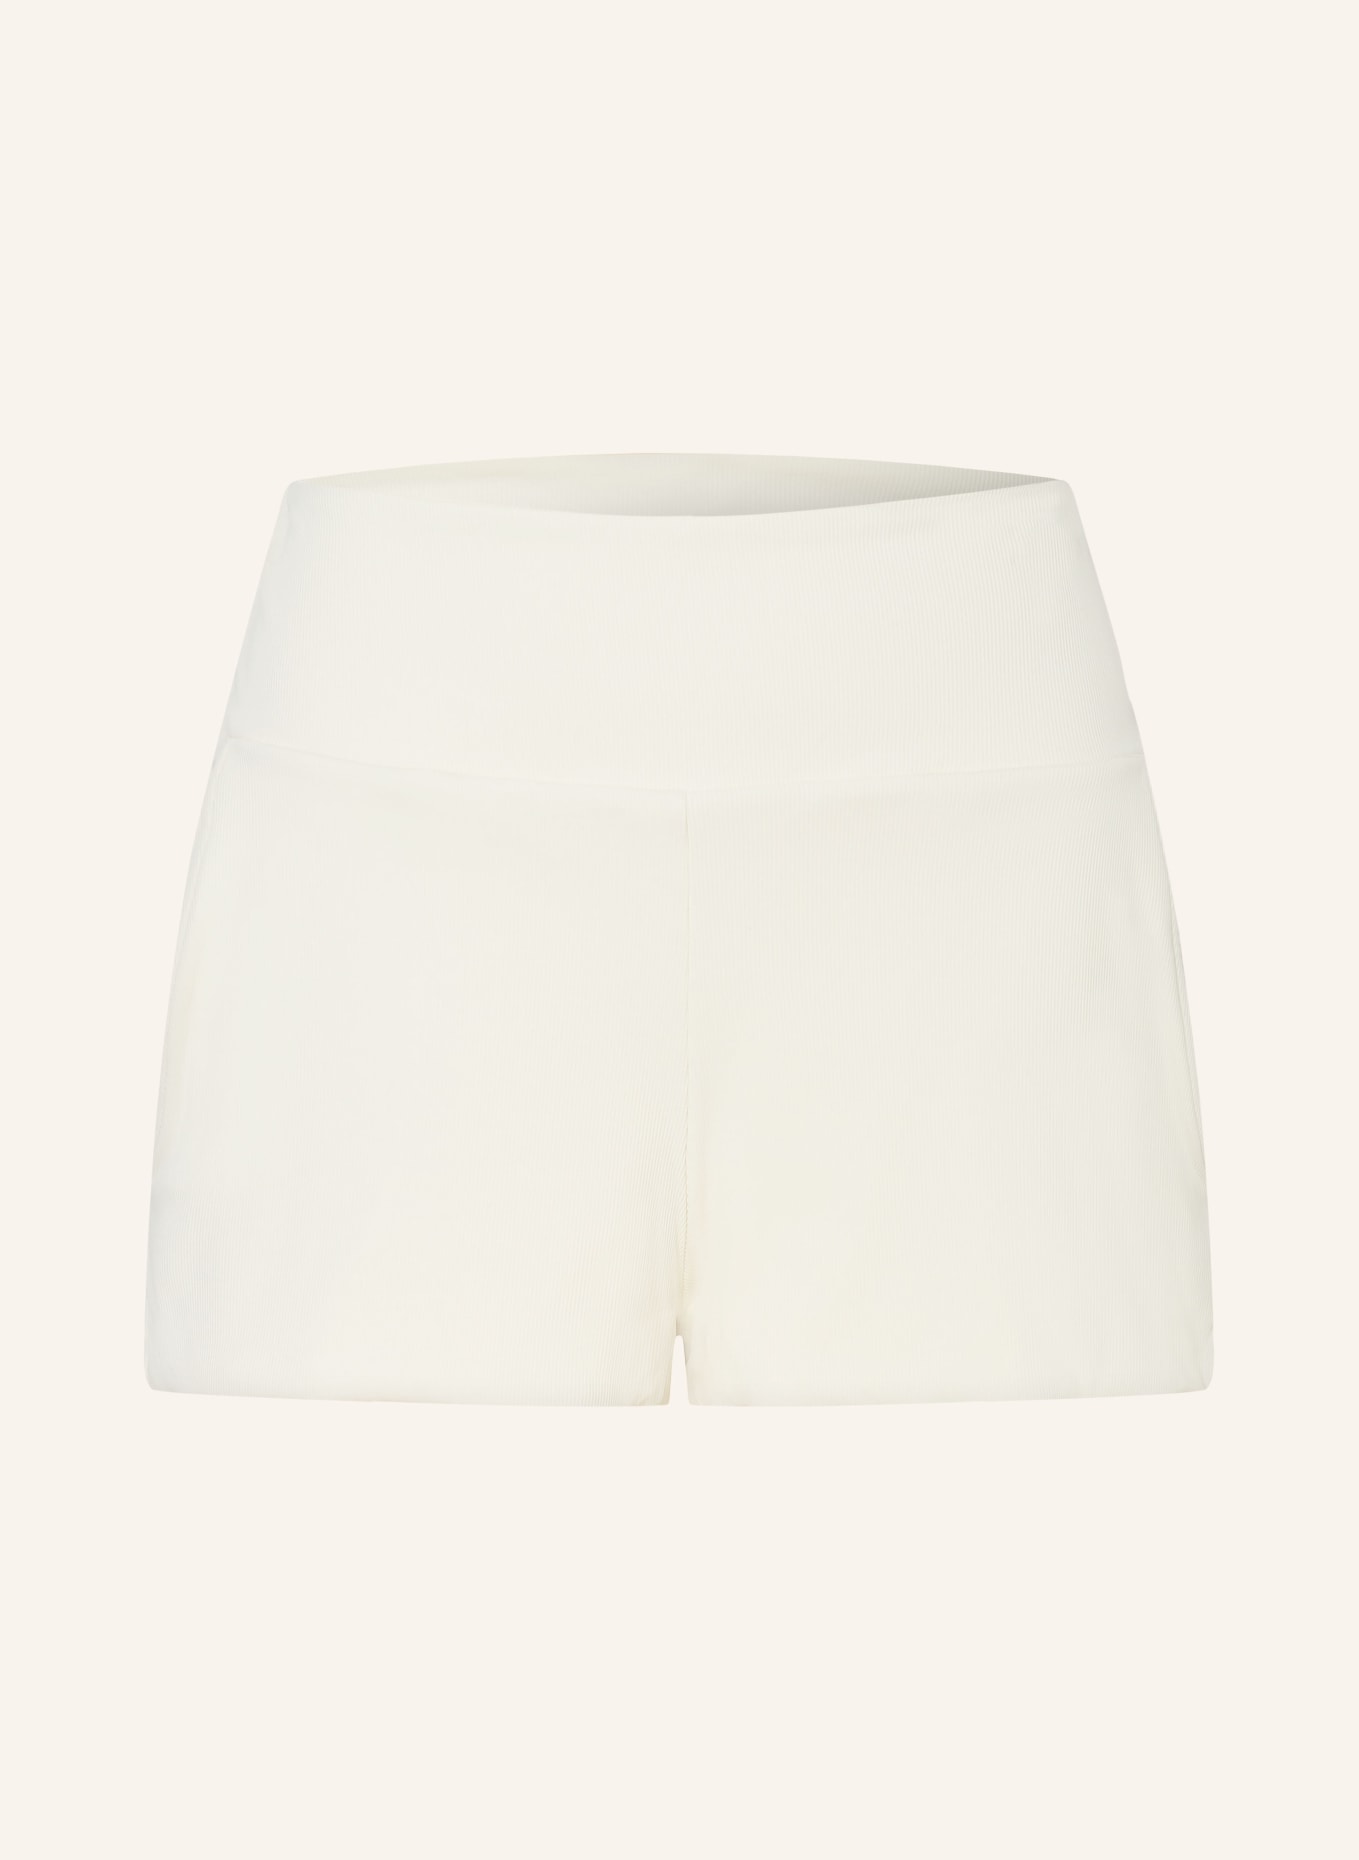 MYMARINI Panty-Bikini-Hose mit UV-Schutz 50+, Farbe: ECRU (Bild 1)